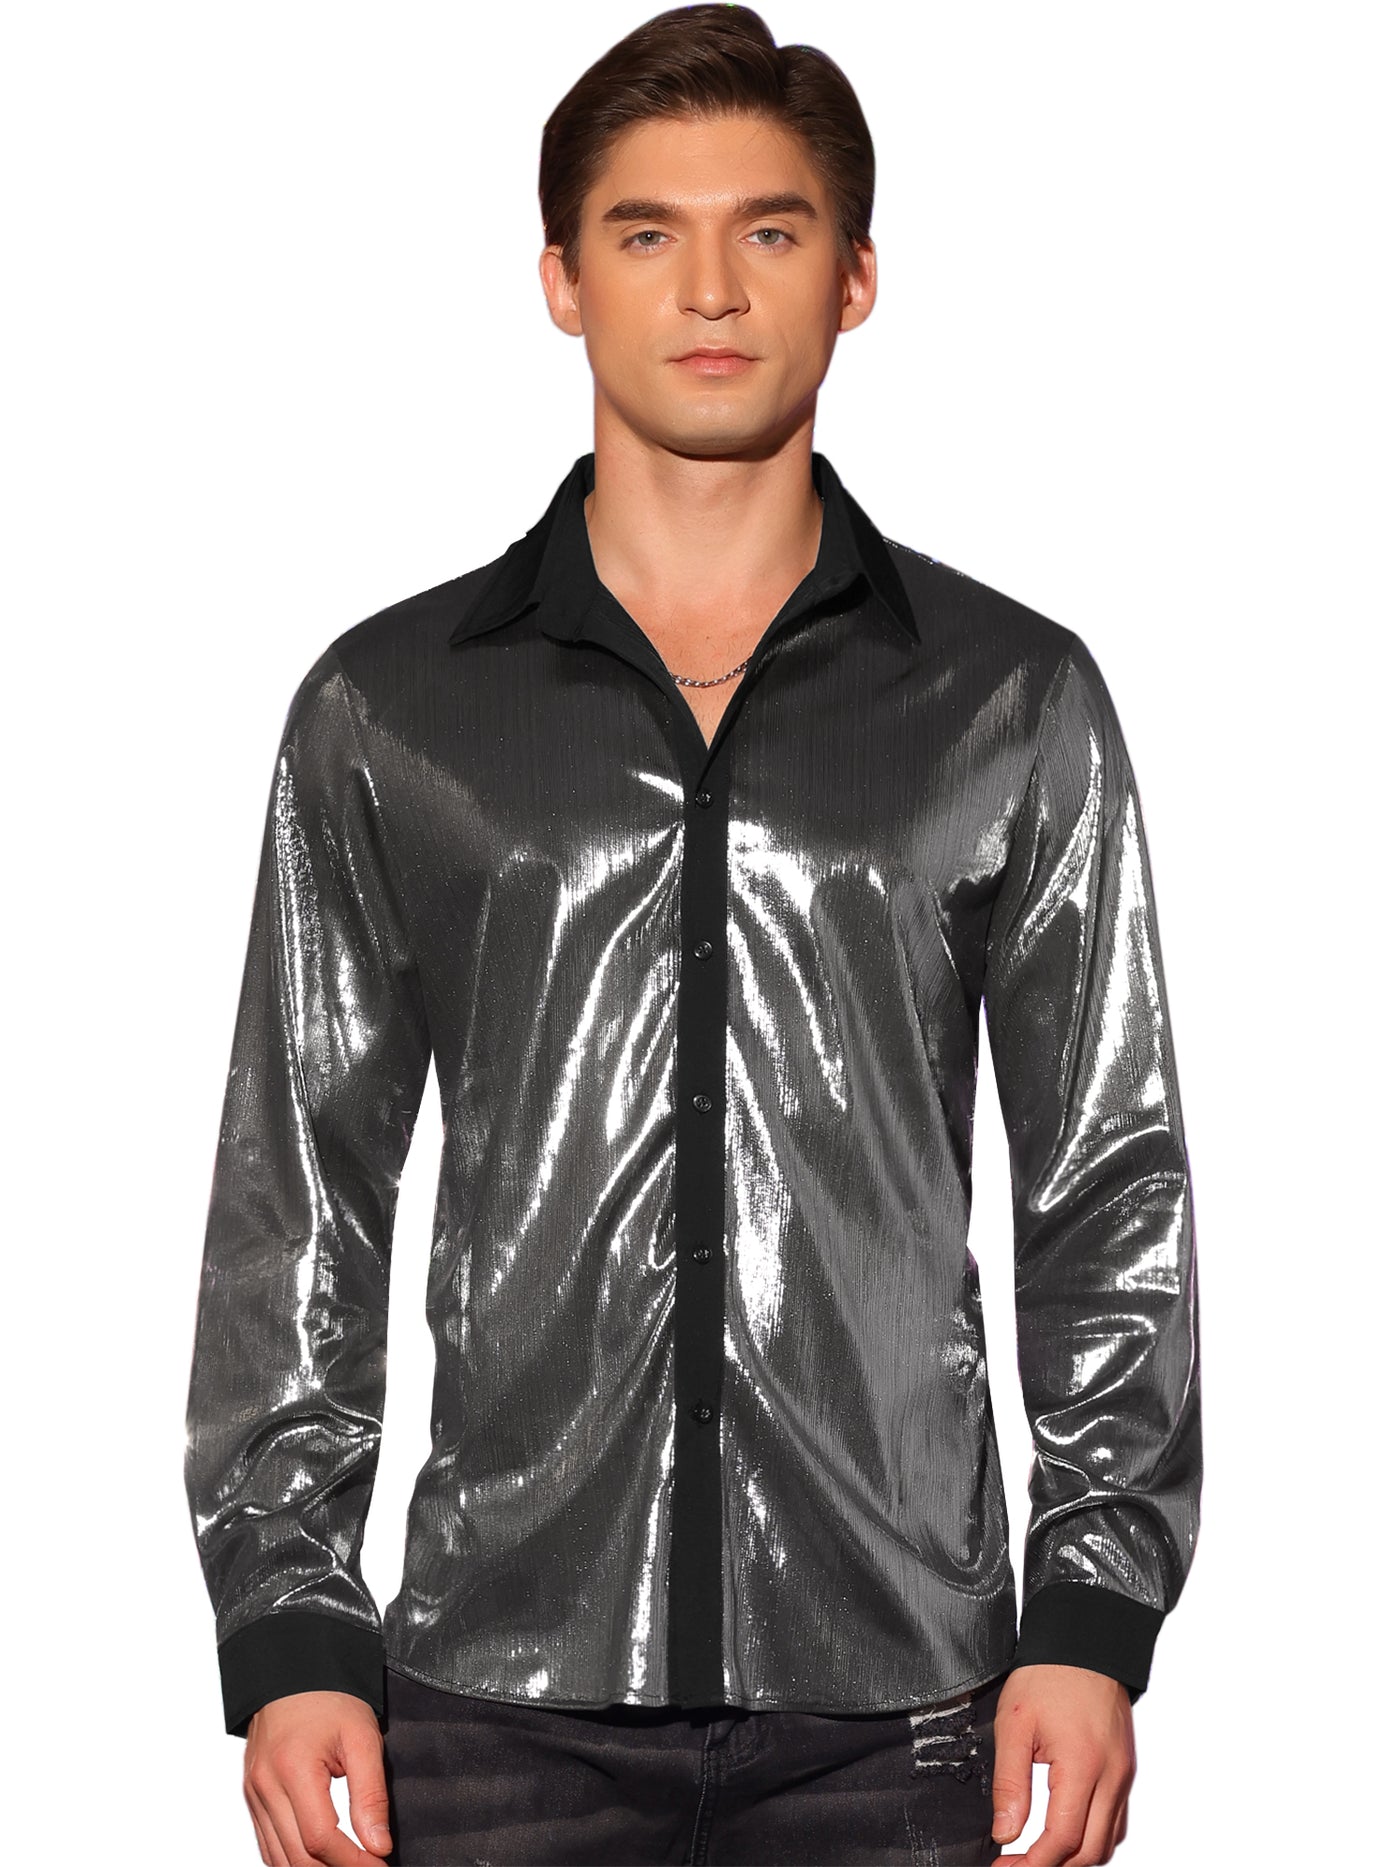 Bublédon Men's Shiny Metallic Long Sleeves Button Party Disco Glitter Shirts